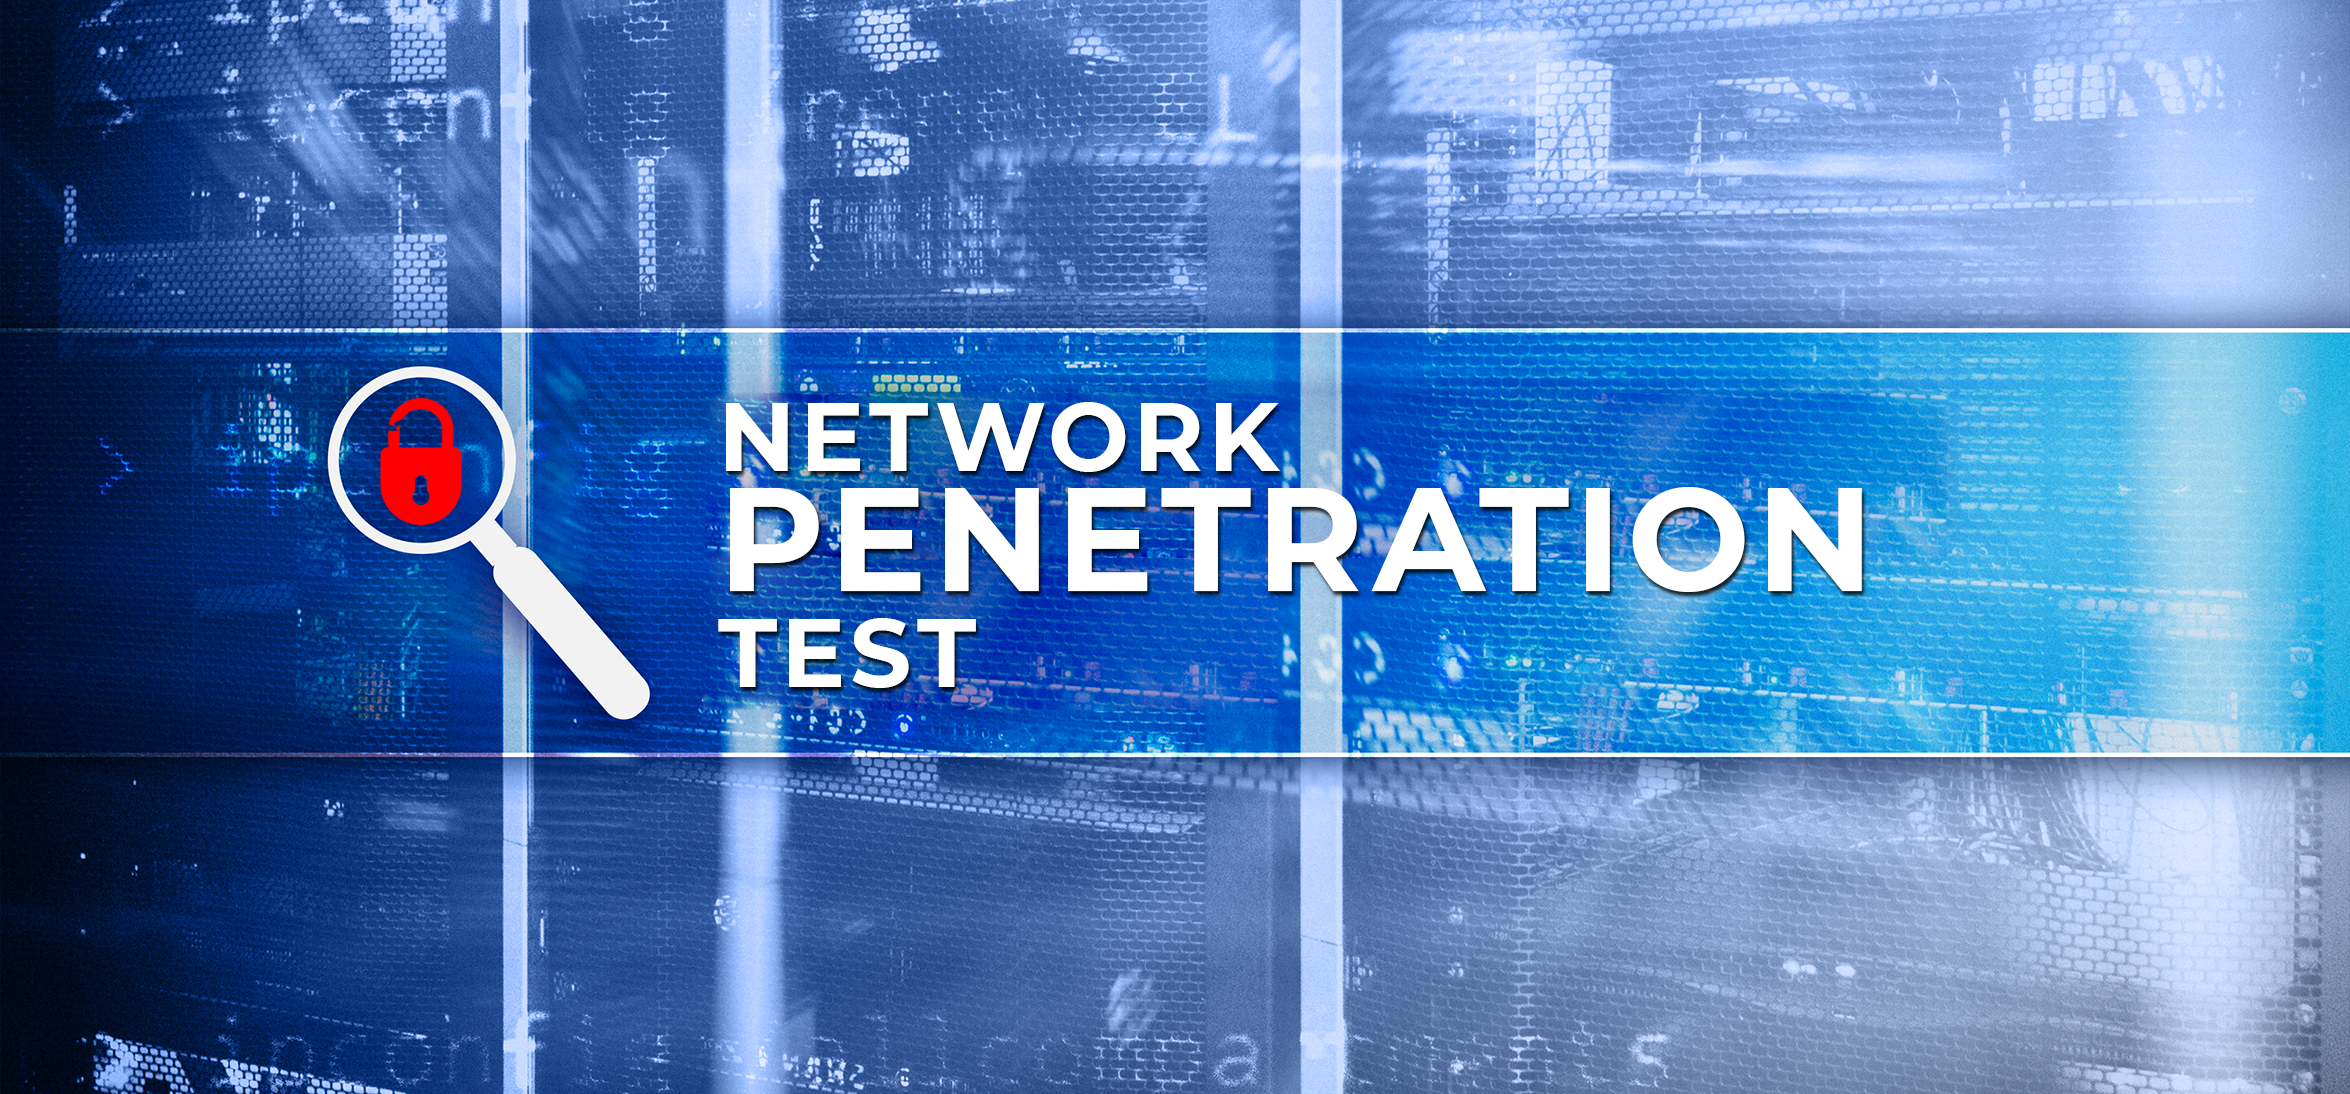 Penetration Testing Services in Stockholm NJ, 07460